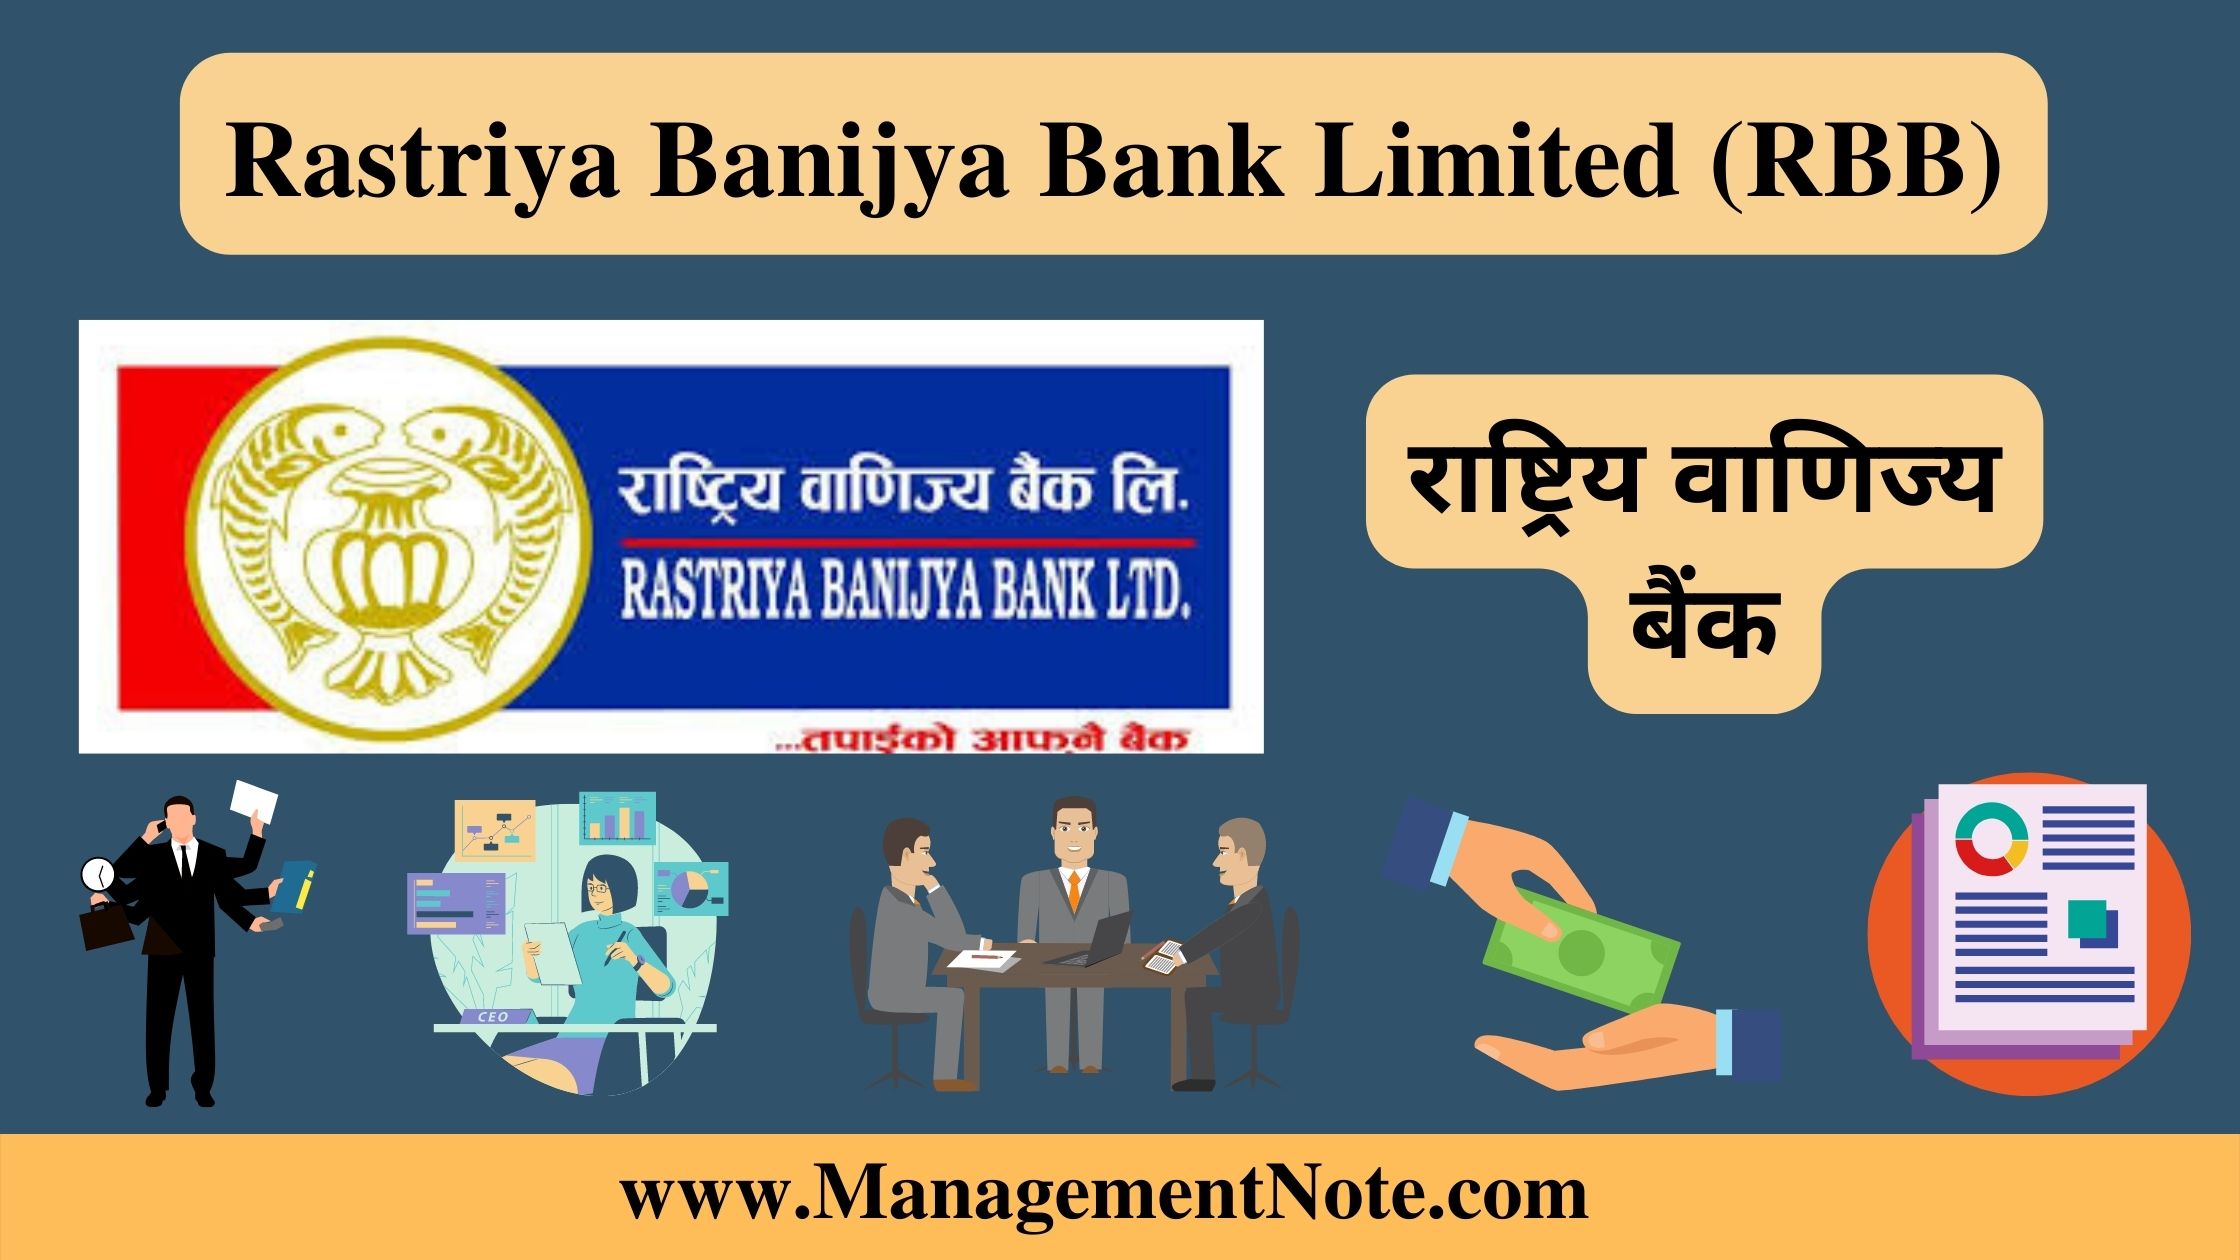 Rastriya Banijya Bank Limited (RBB)